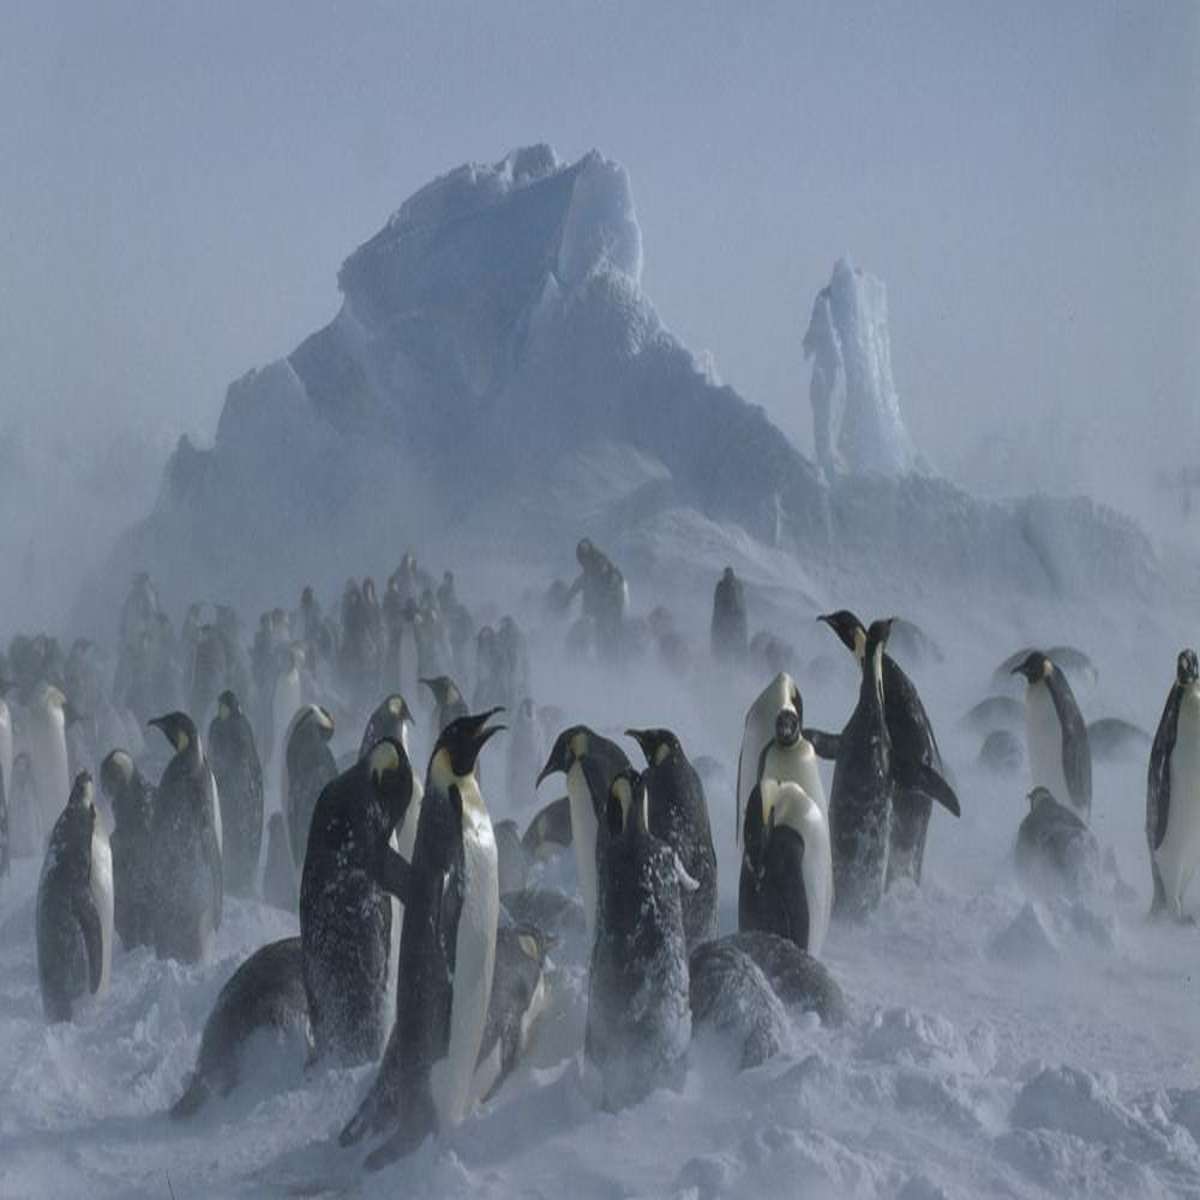 3% of the ice in Antarctica is just penguin [pee].